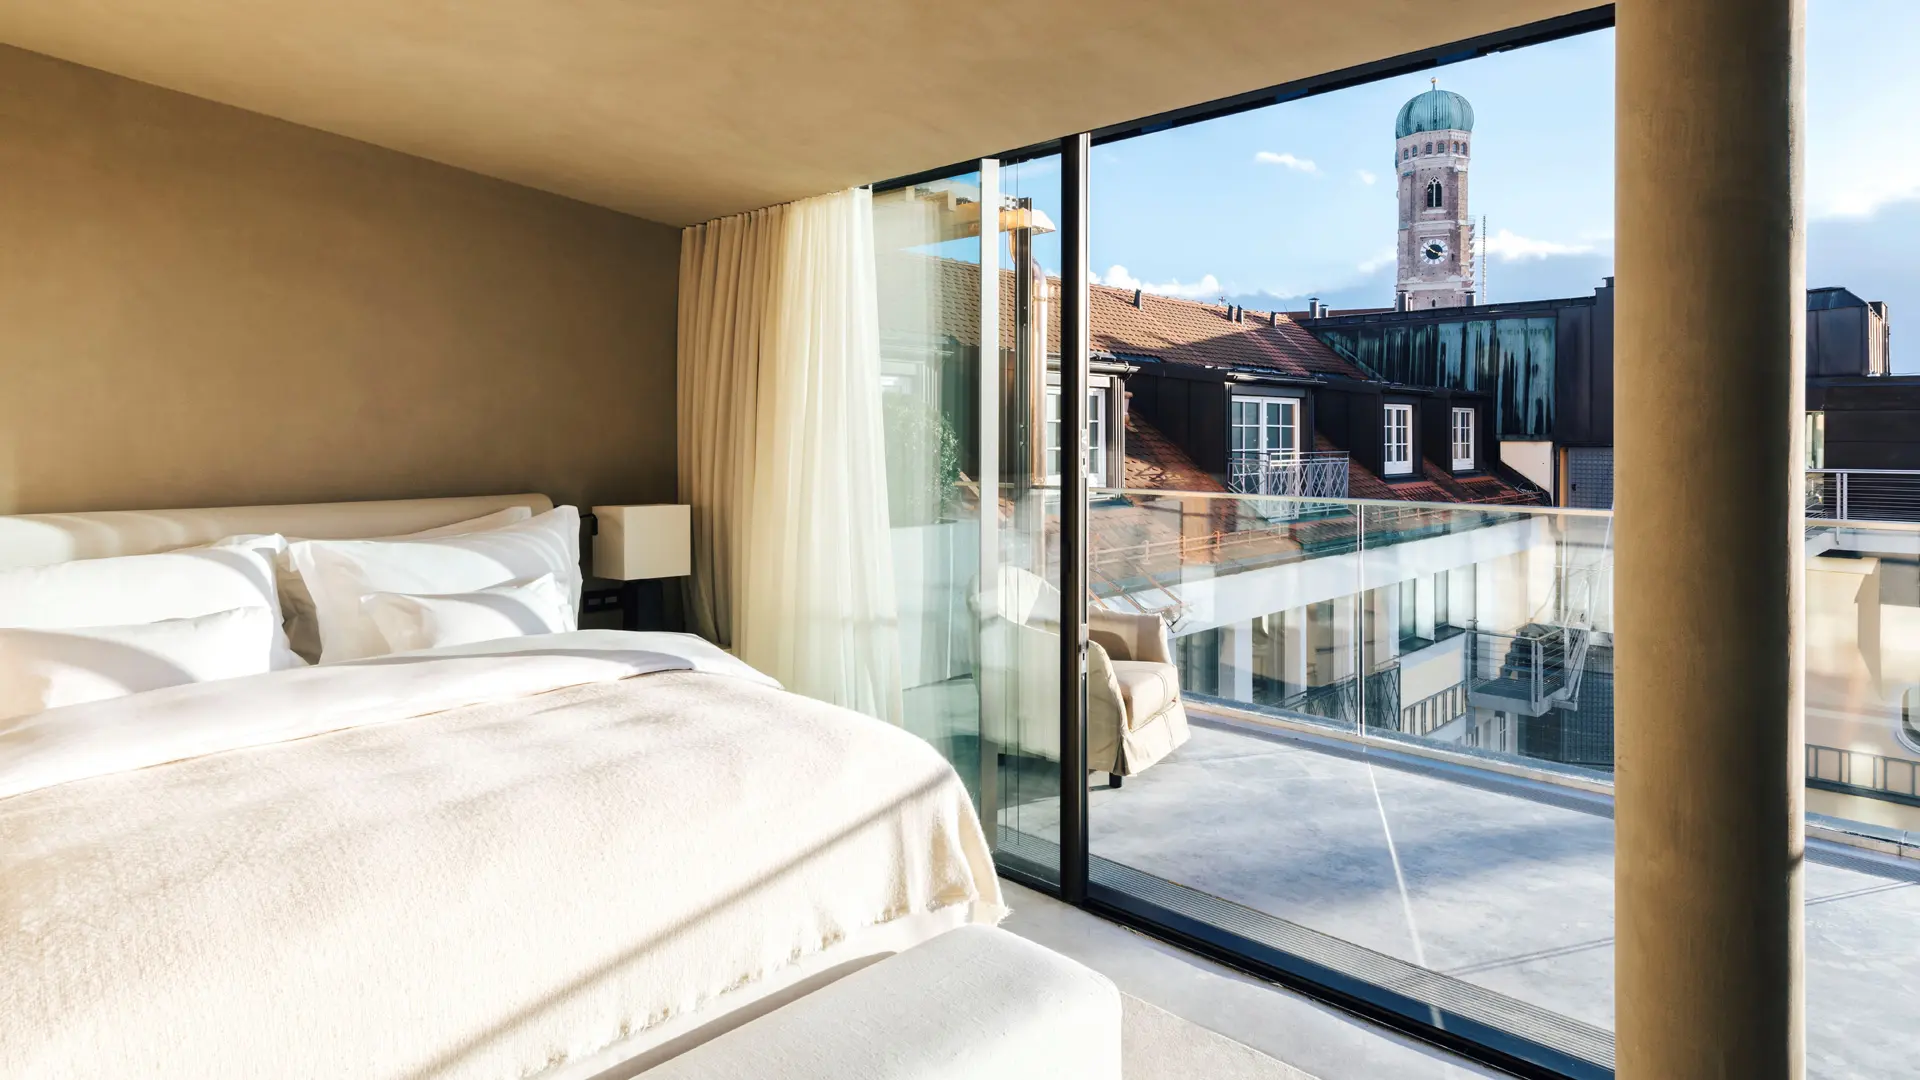 Hotel review Accommodation' - Bayerischer Hof - 3